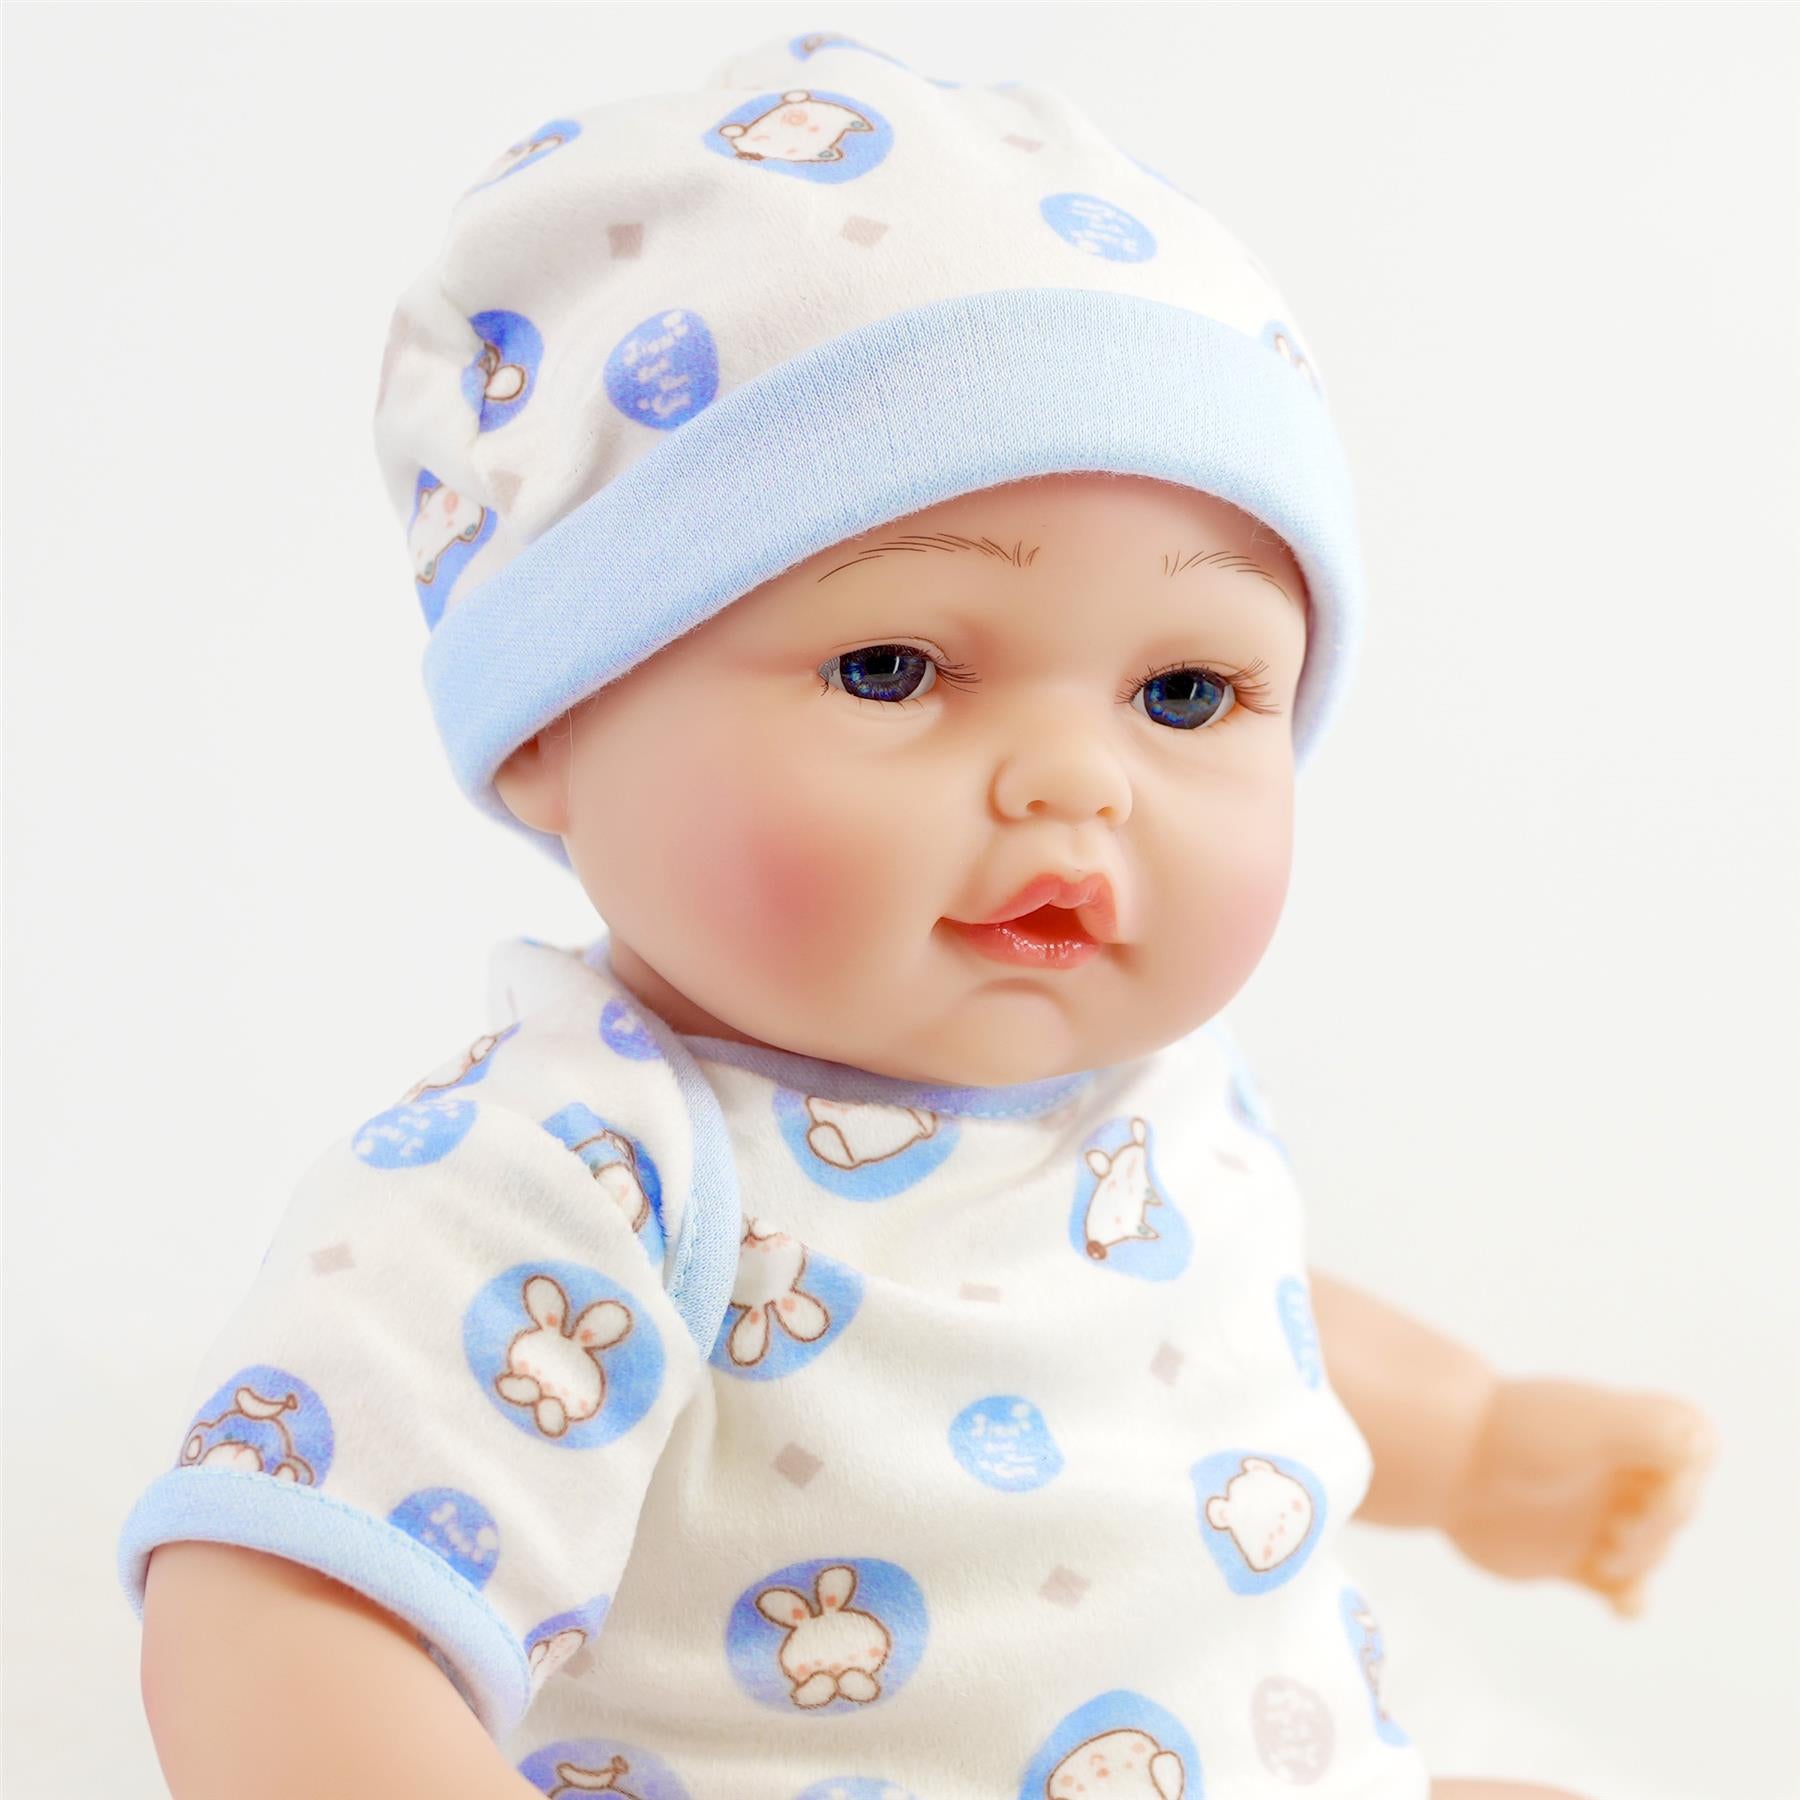 BiBi Doll Baby Doll Lifelike Reborn Baby Boy Doll with Open Eyes 17"